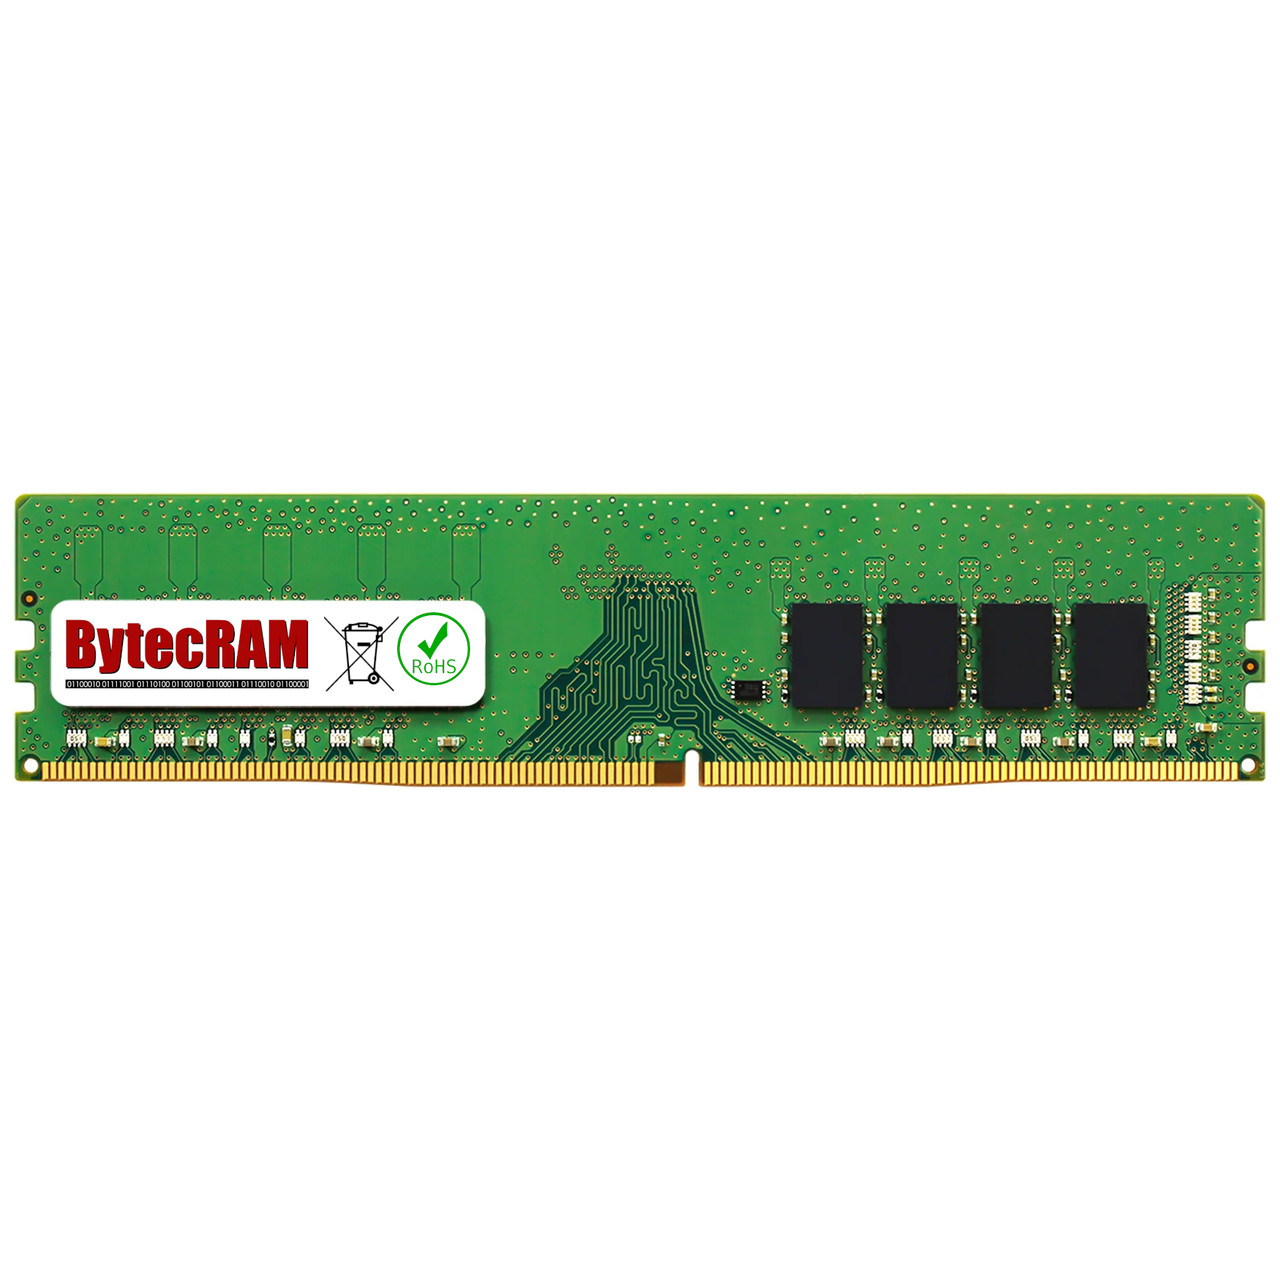 eBay*16GB Acer Predator Orion 600-I7KDCE DDR4 2666MHz UDIMM Memory RAM Upgrade